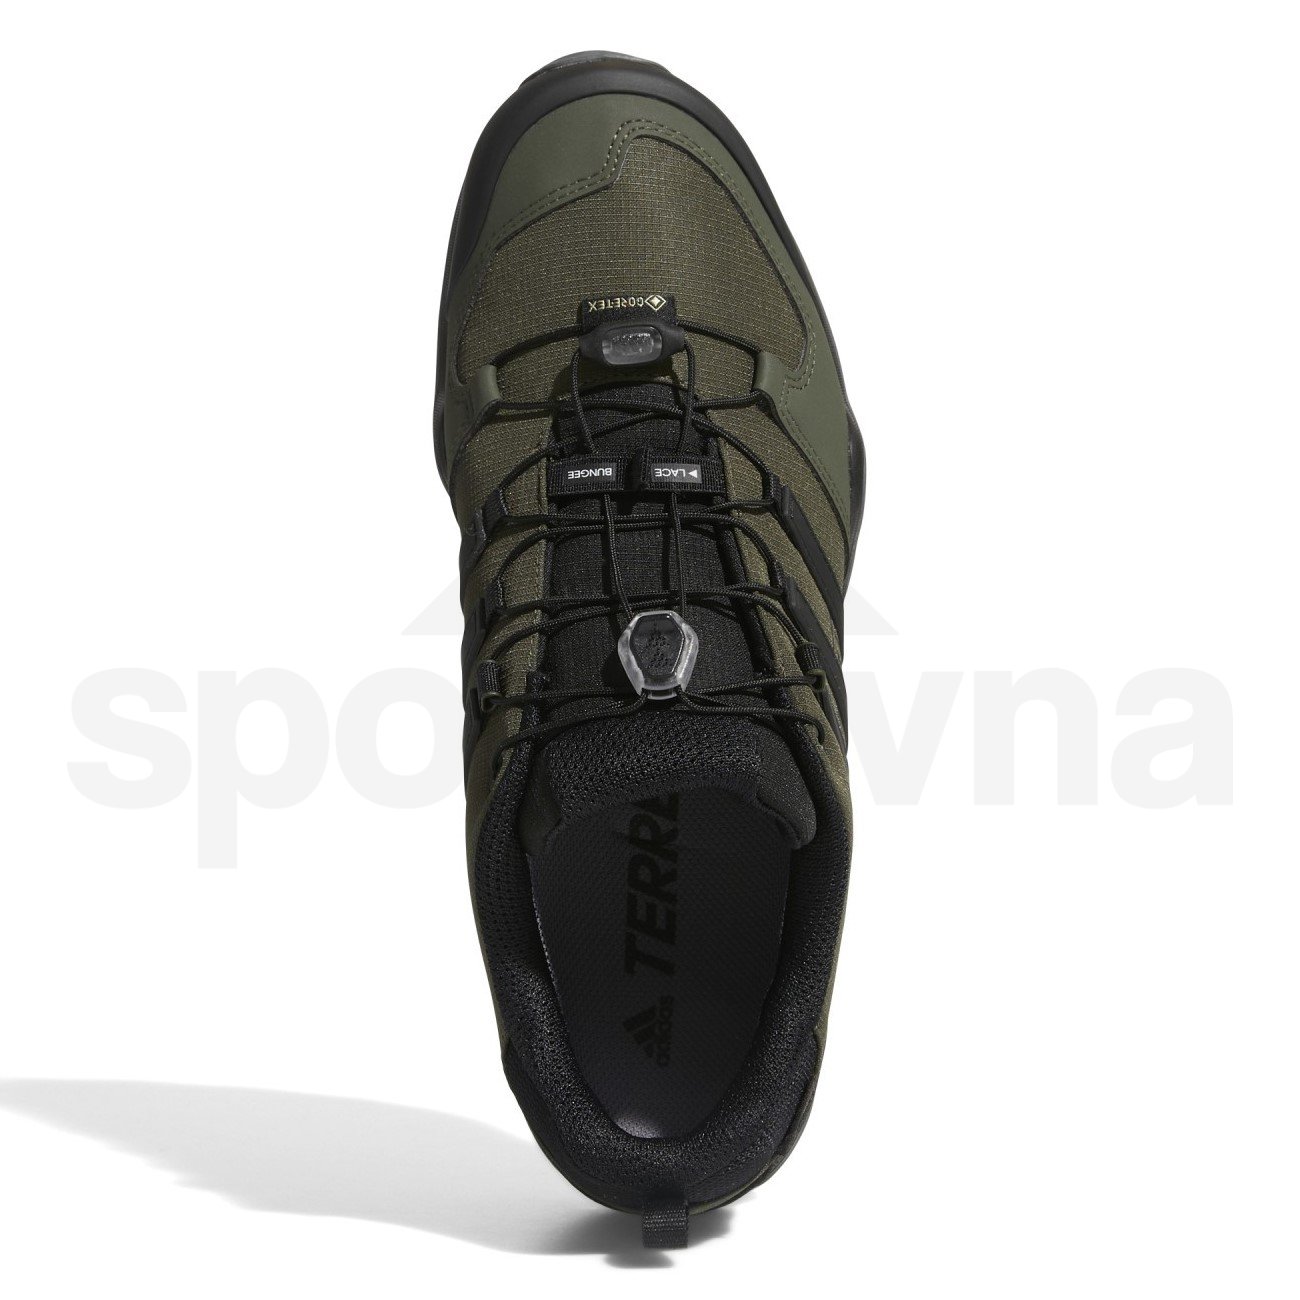 Obuv Adidas Terrex Swift R2 GTX M - zelená/černá